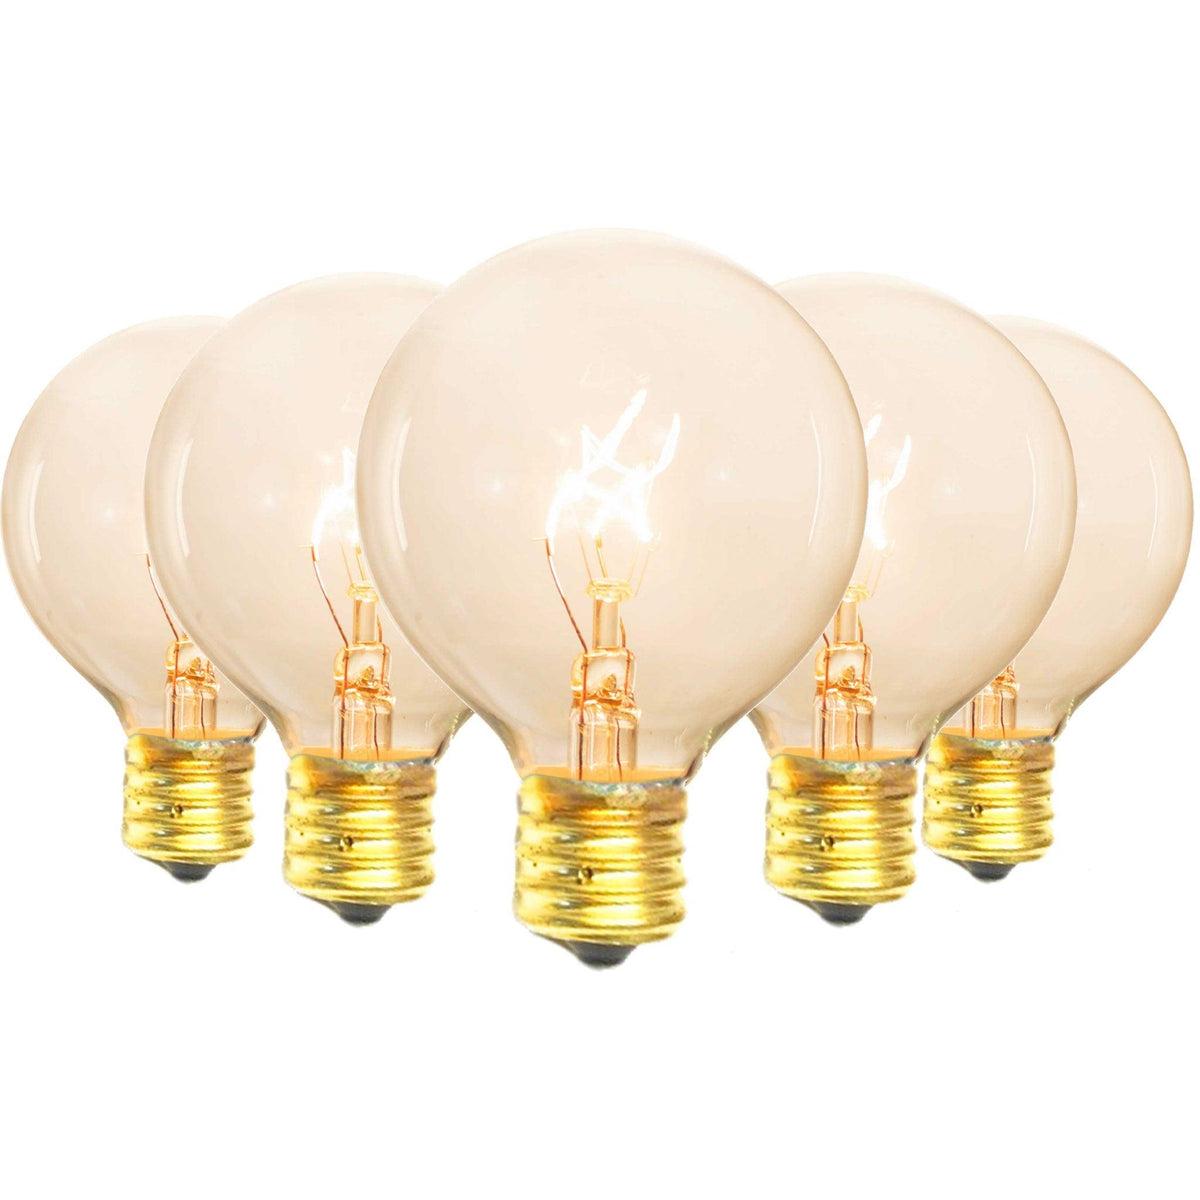 Lee Display's brand new box of 25 Clear Transparent G50 Globe Light Bulbs on sale now at leedisplay.com